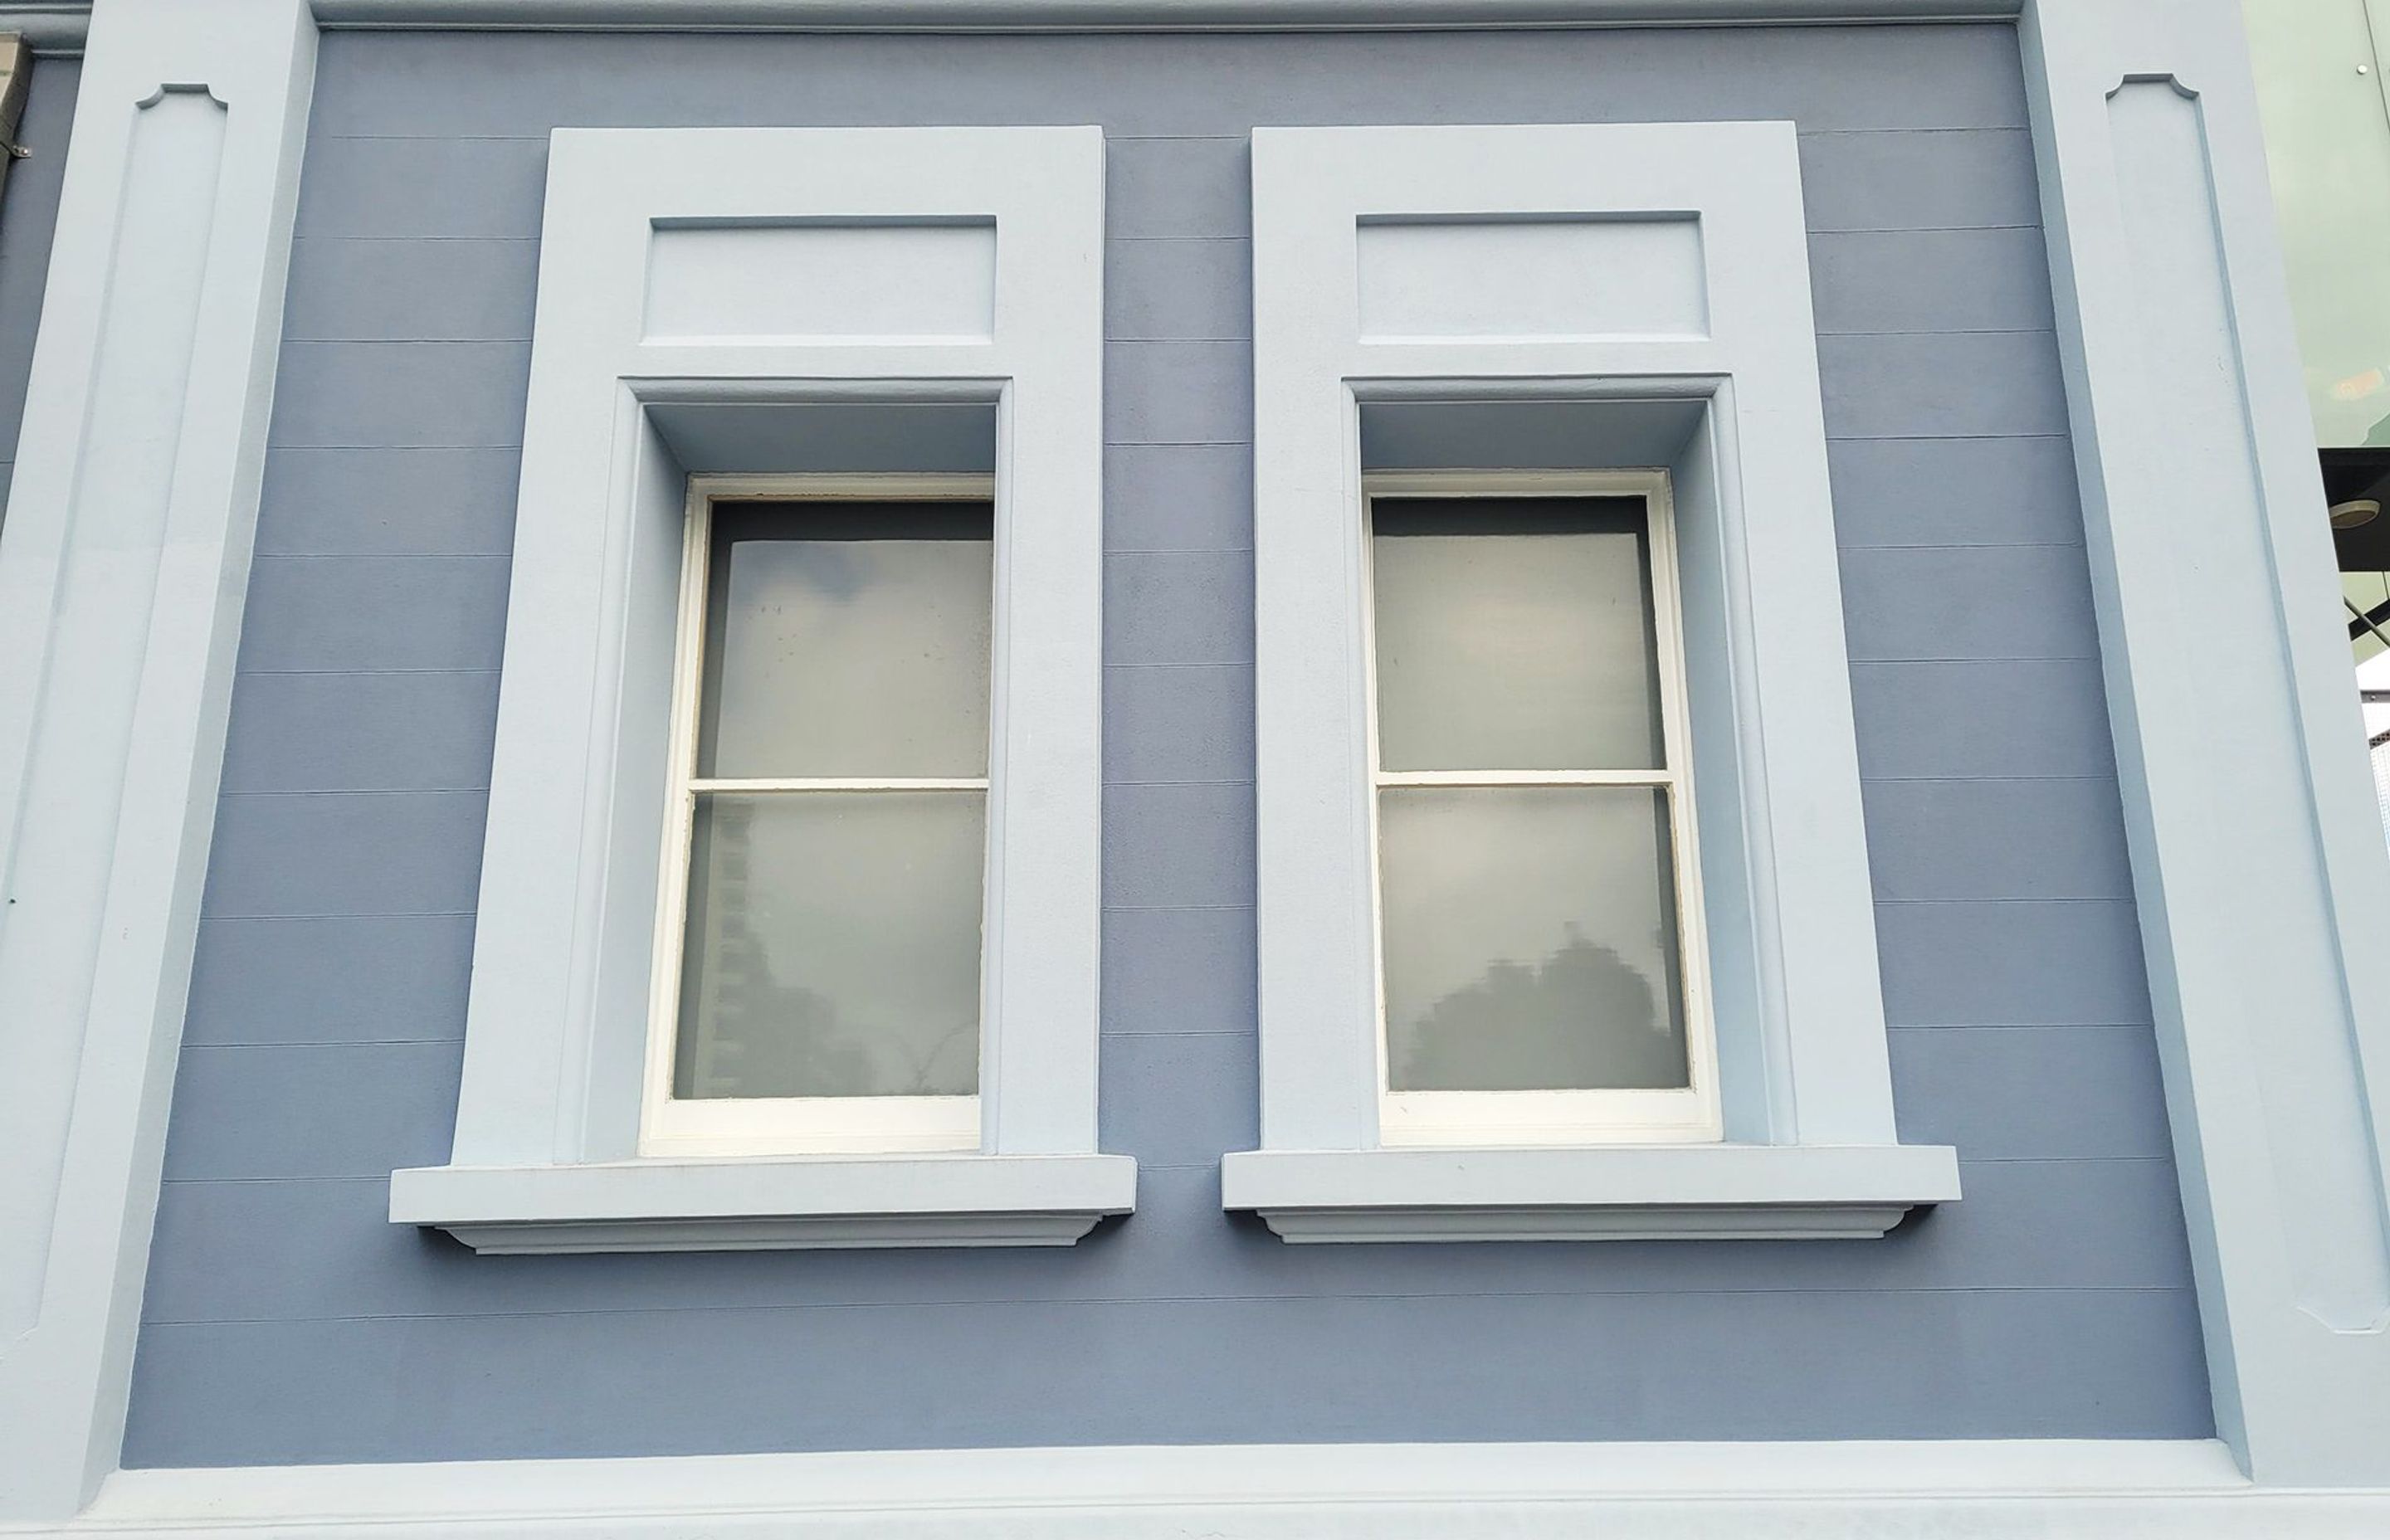 Keim Granital Coatings over ASOCRET concrete repair to the window details